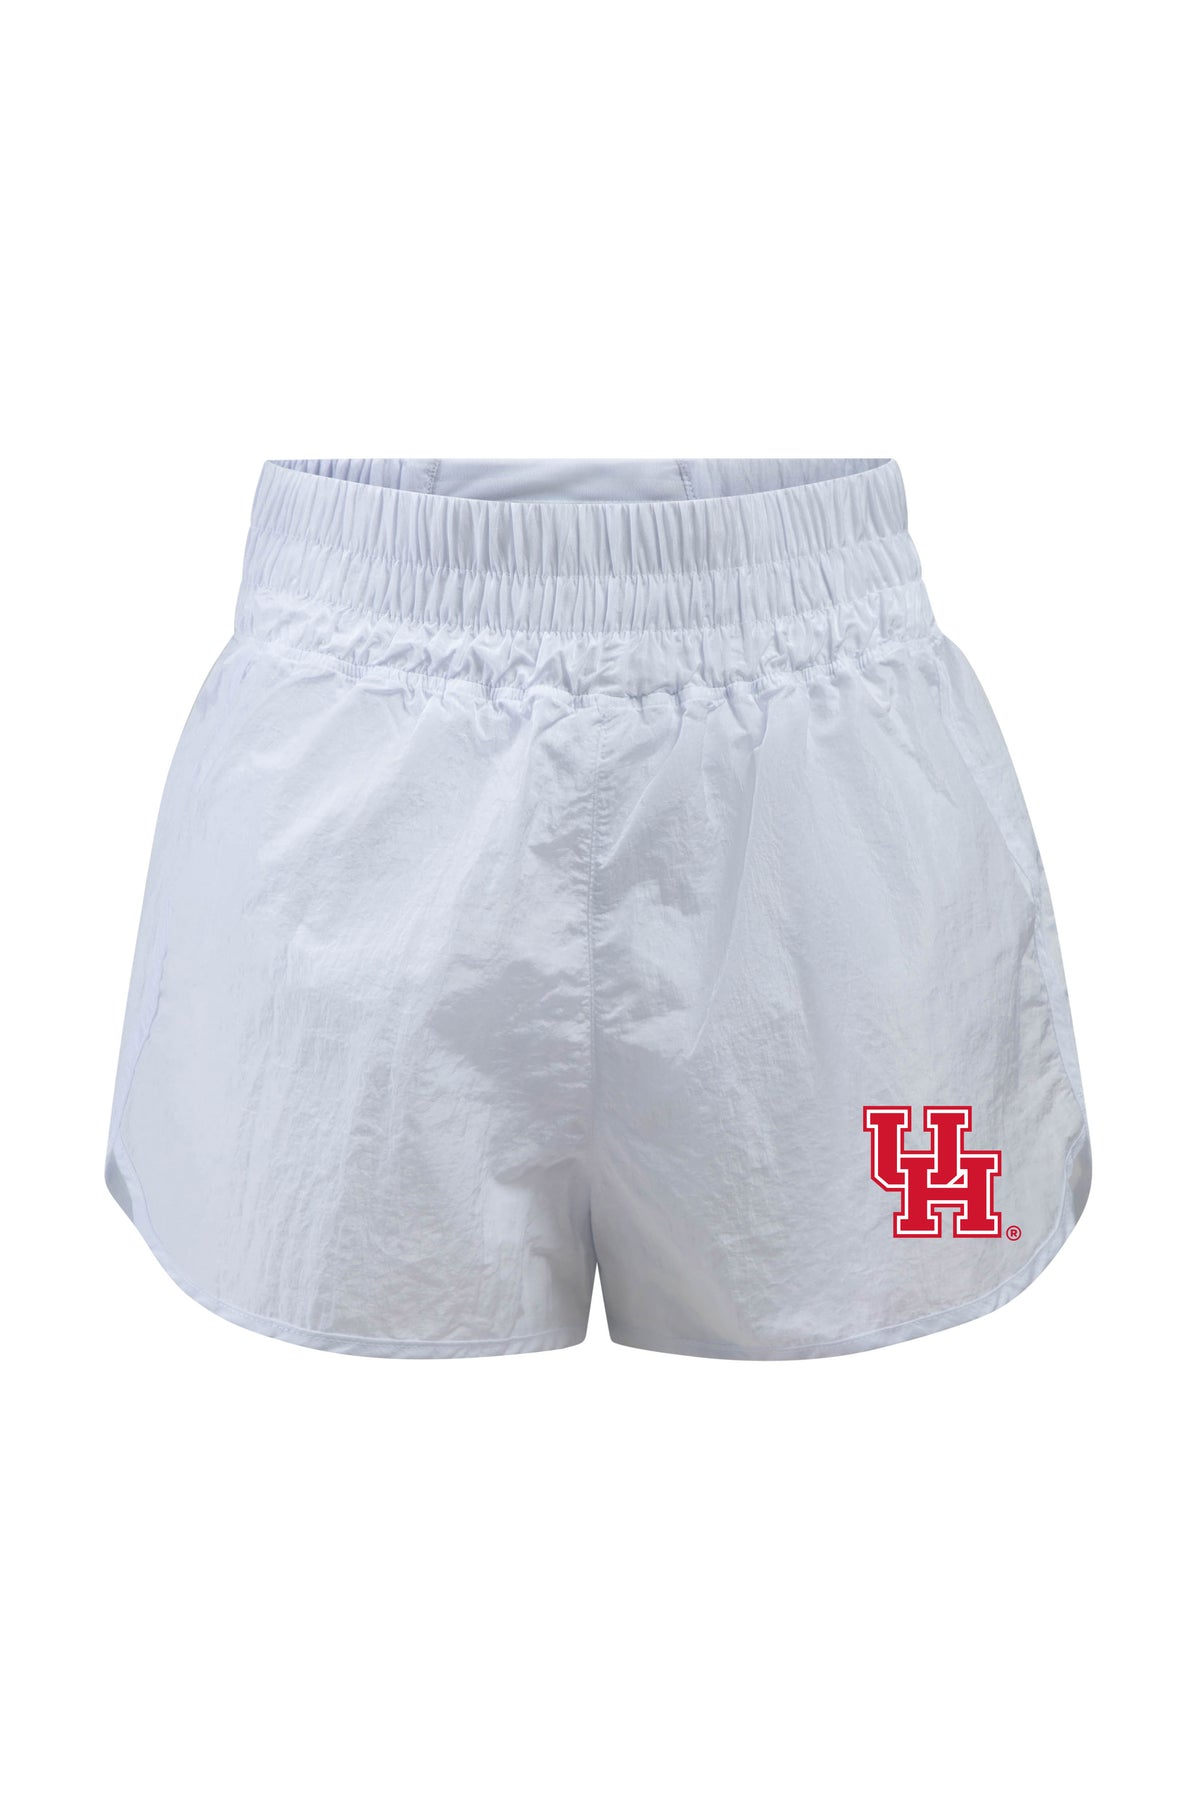 University of Houston Boxer Short